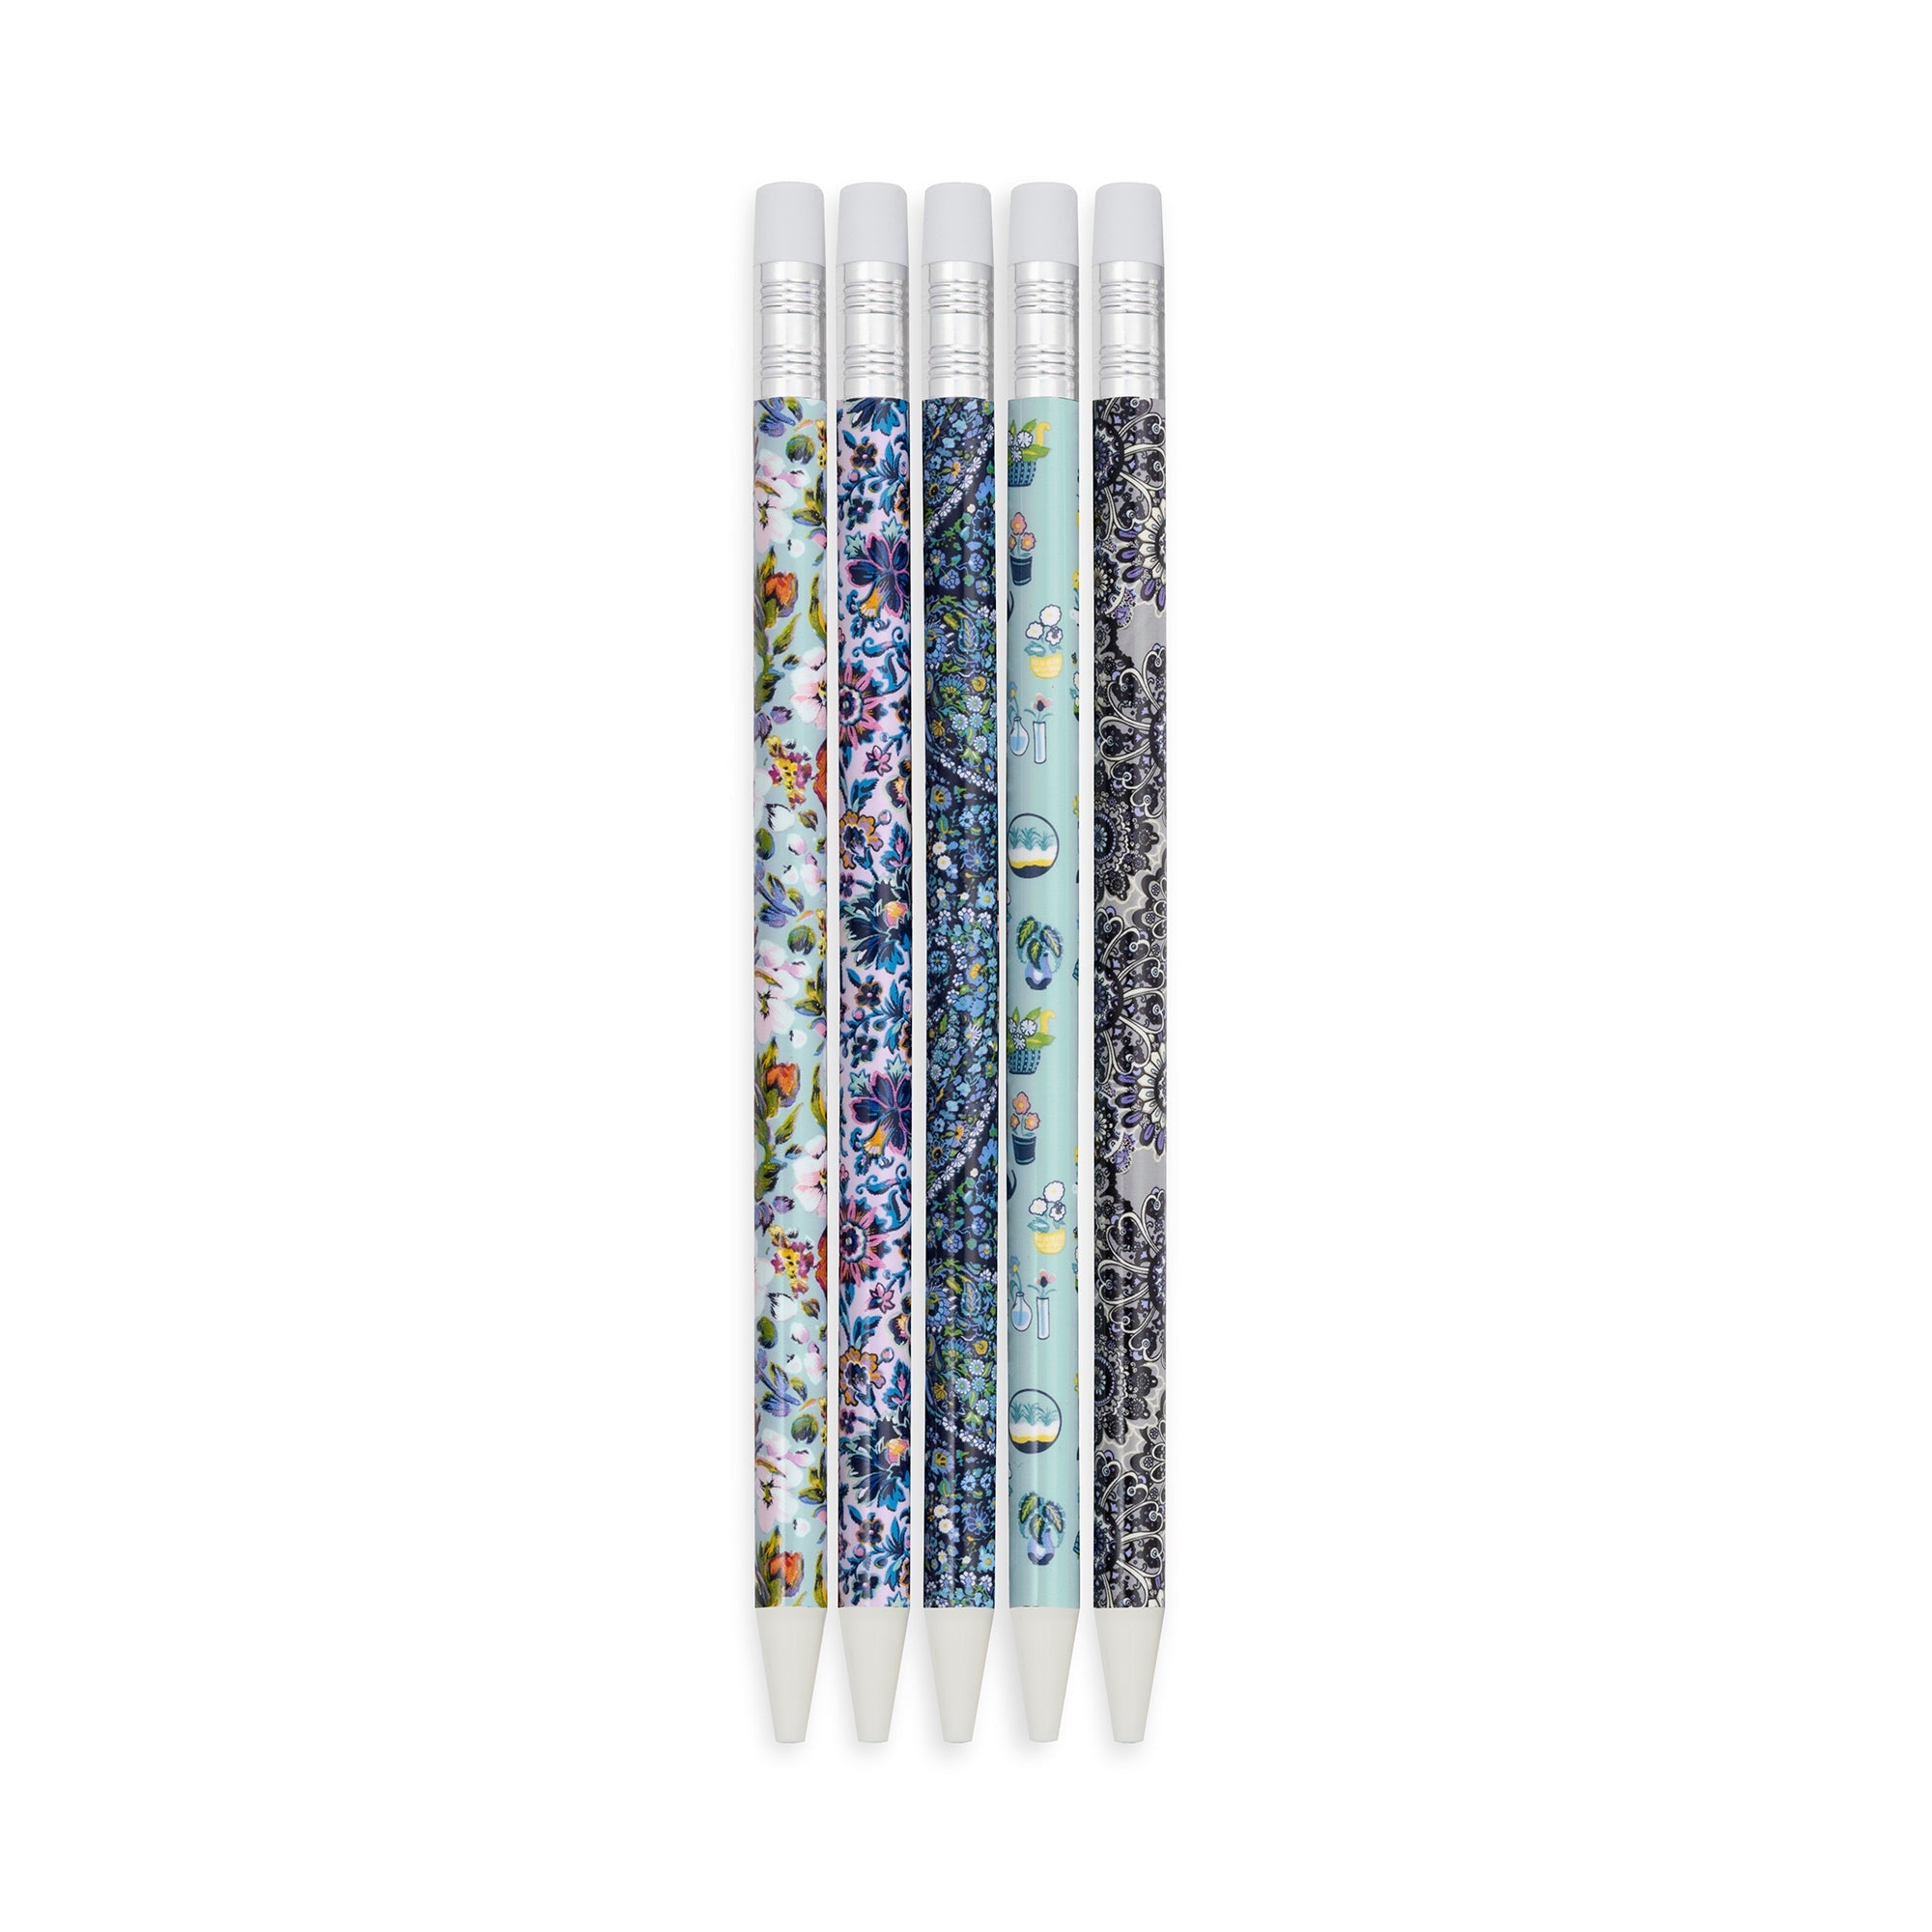 Mechanical Pencil Set, BTS 23 Medley - Lifeguard Press